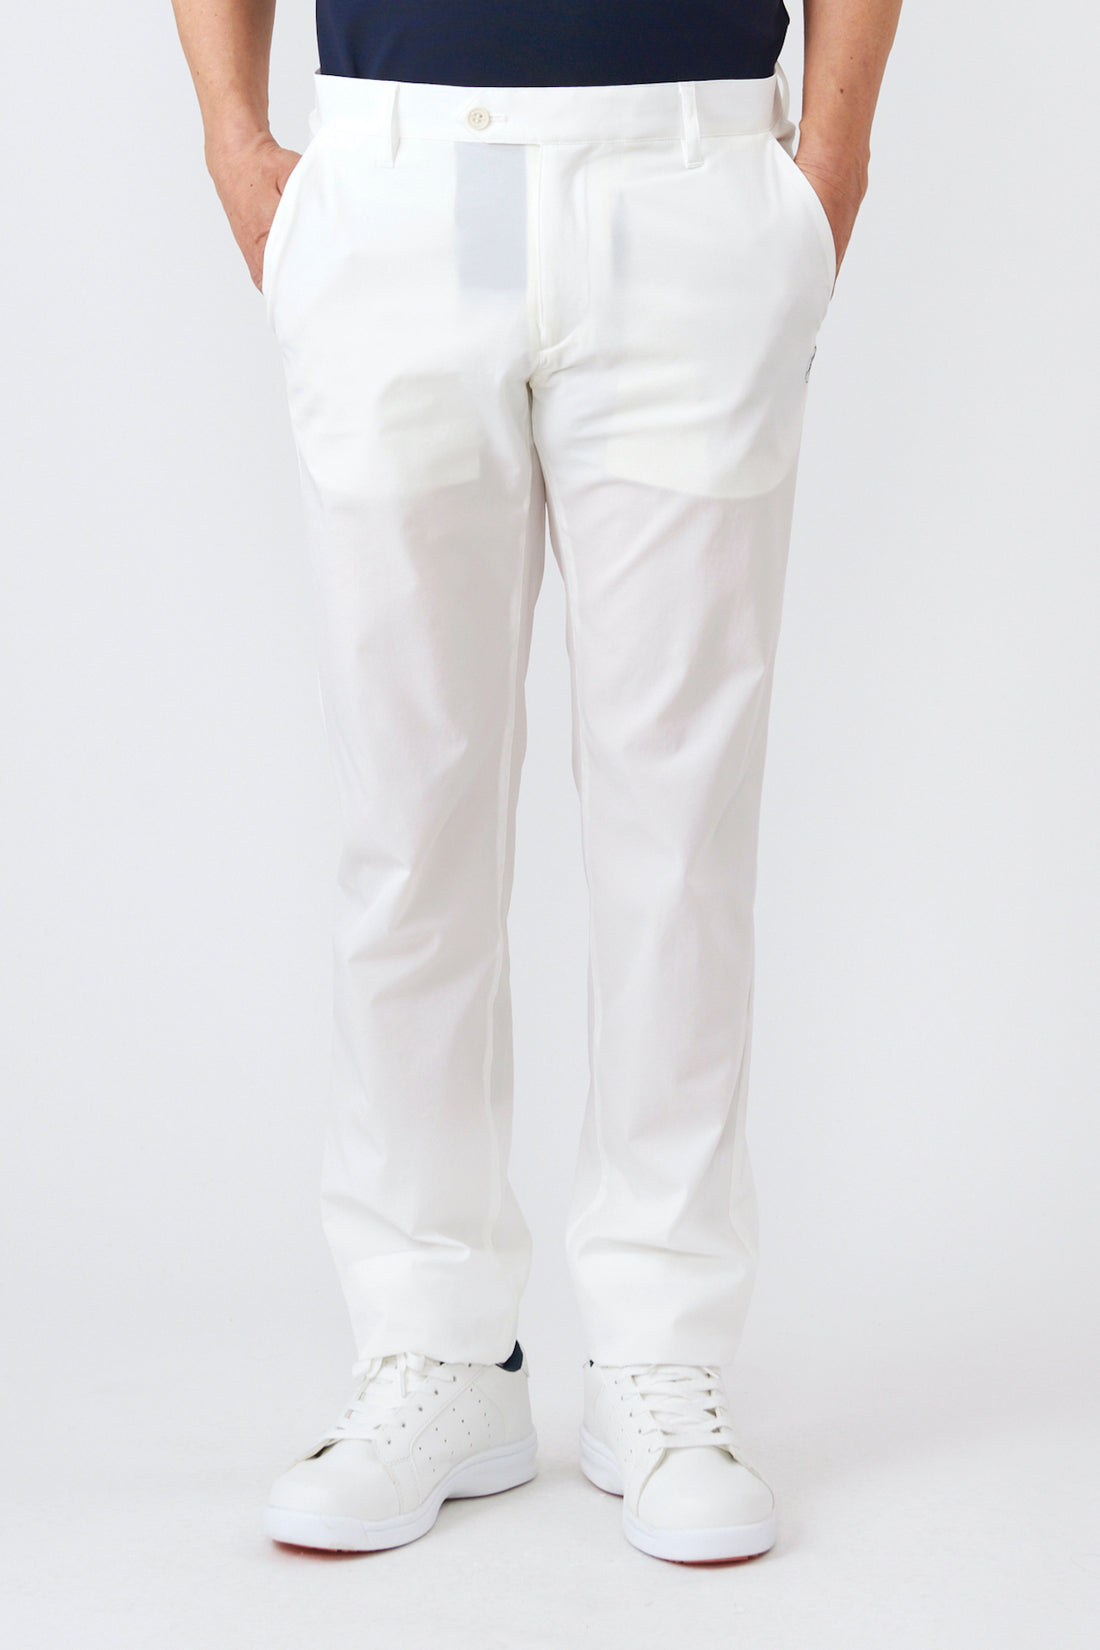 Basic pants (700J1500)